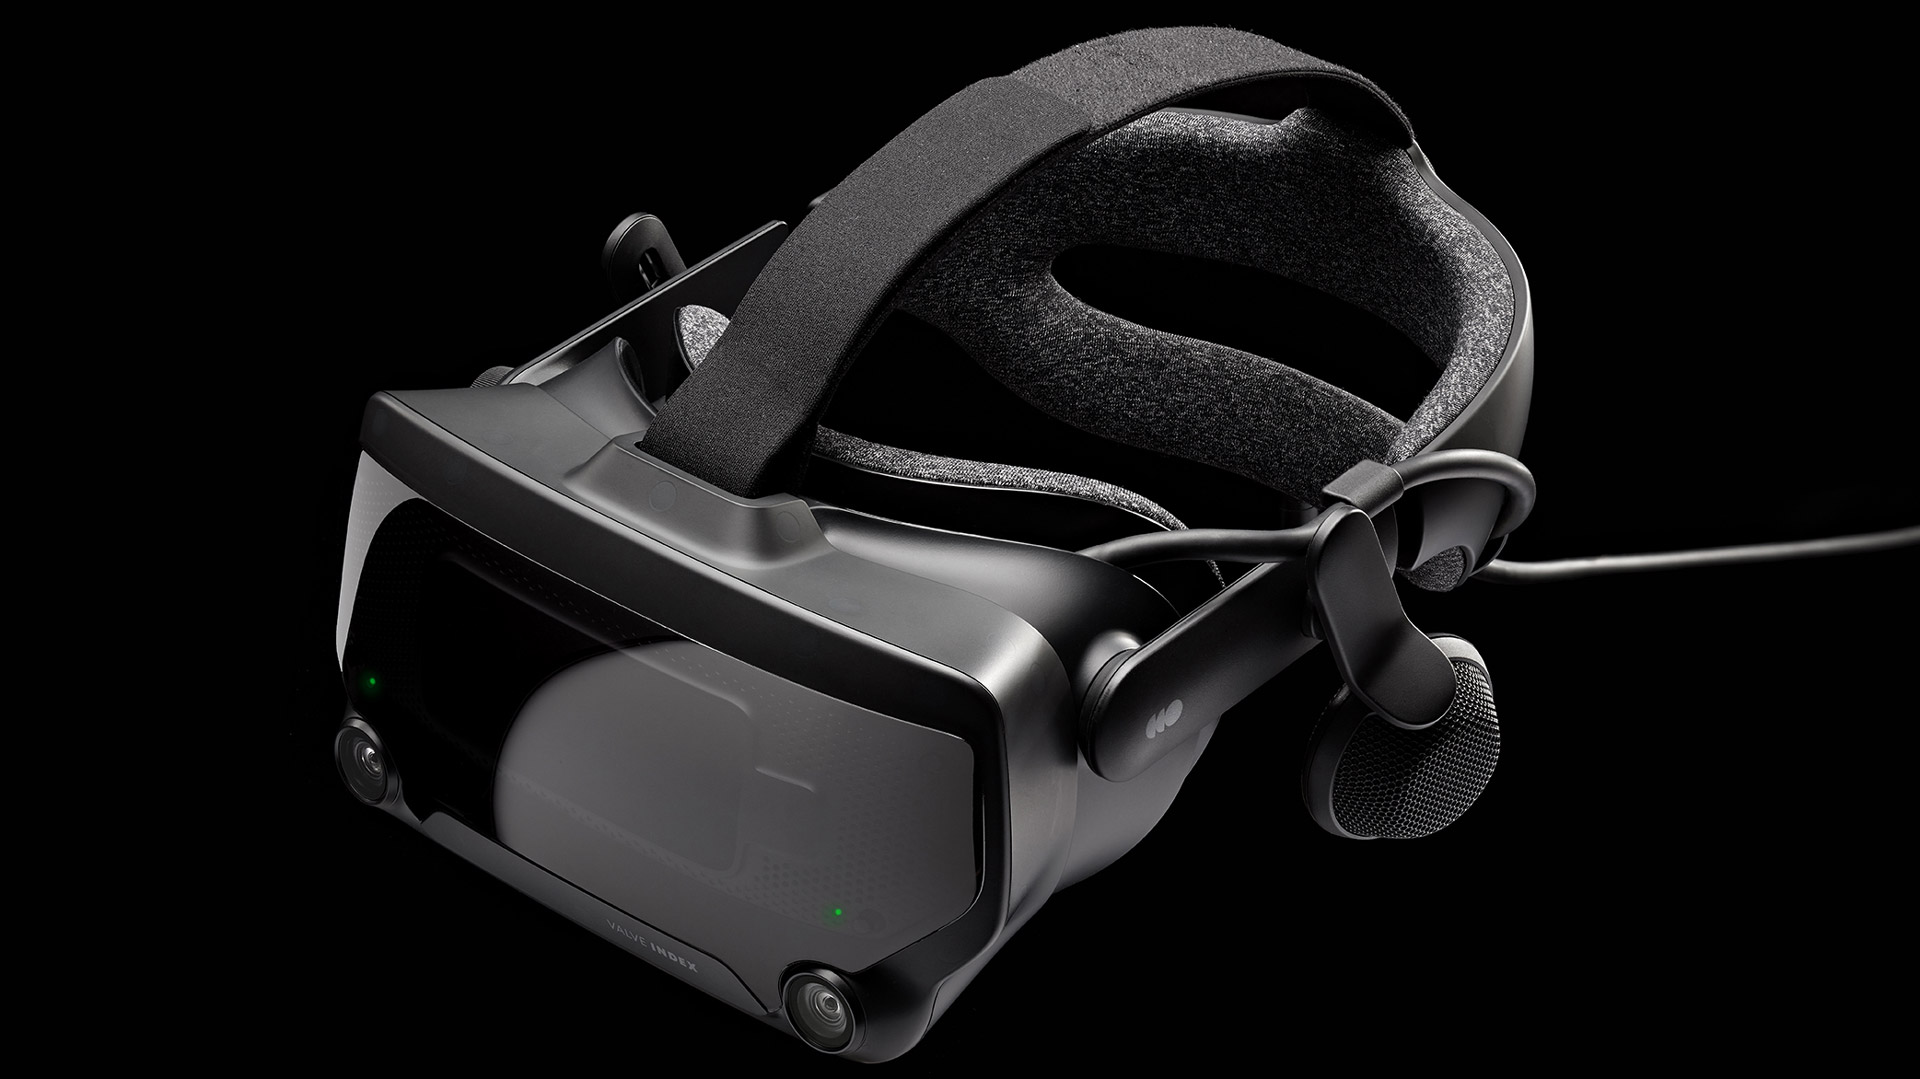 Elite Dangerous' VR Minimum Specs are Hefty